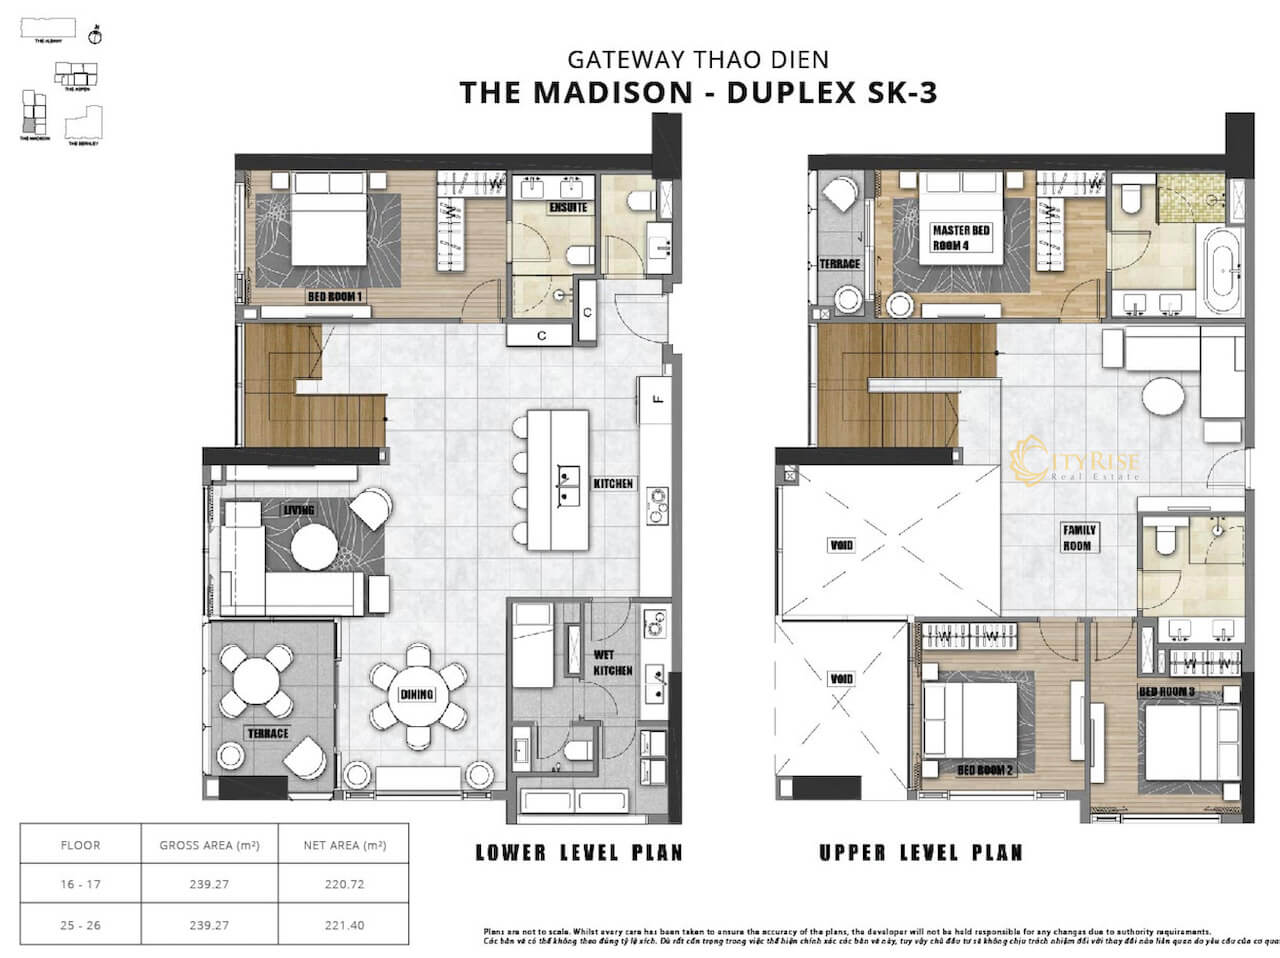 Floor plan of Duplex apartment in The Madison Gateway Thao Dien tower, district 2